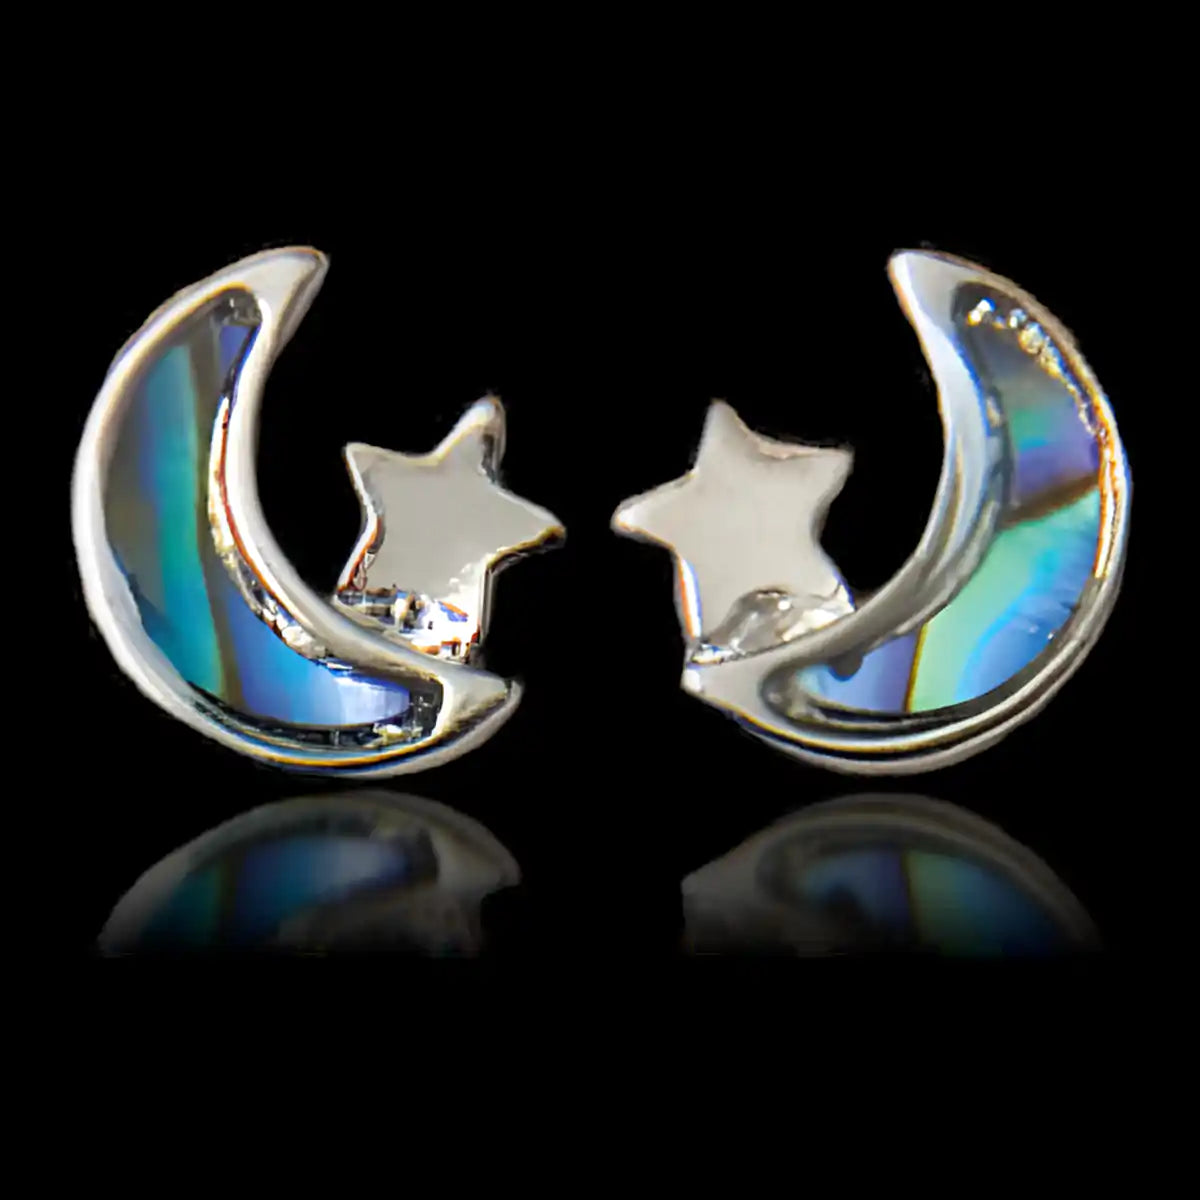 Glacier pearle star & moon earrings